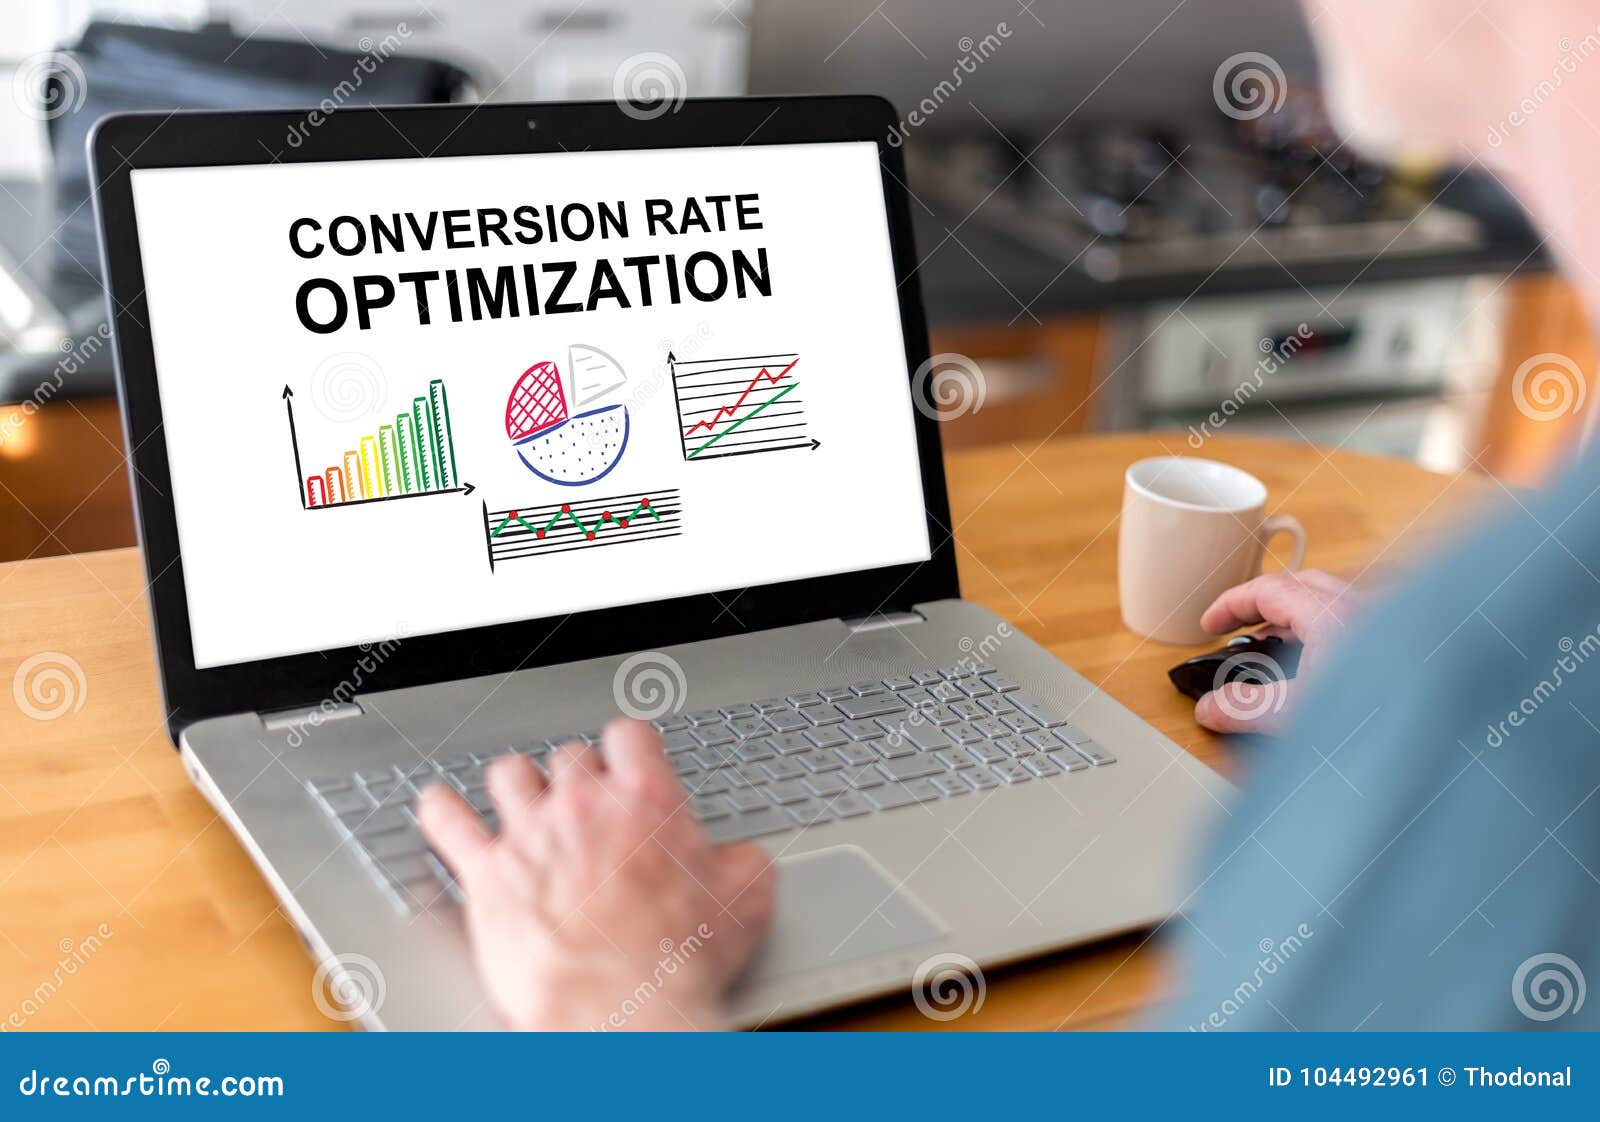 conversion rate optimization concept on a laptop